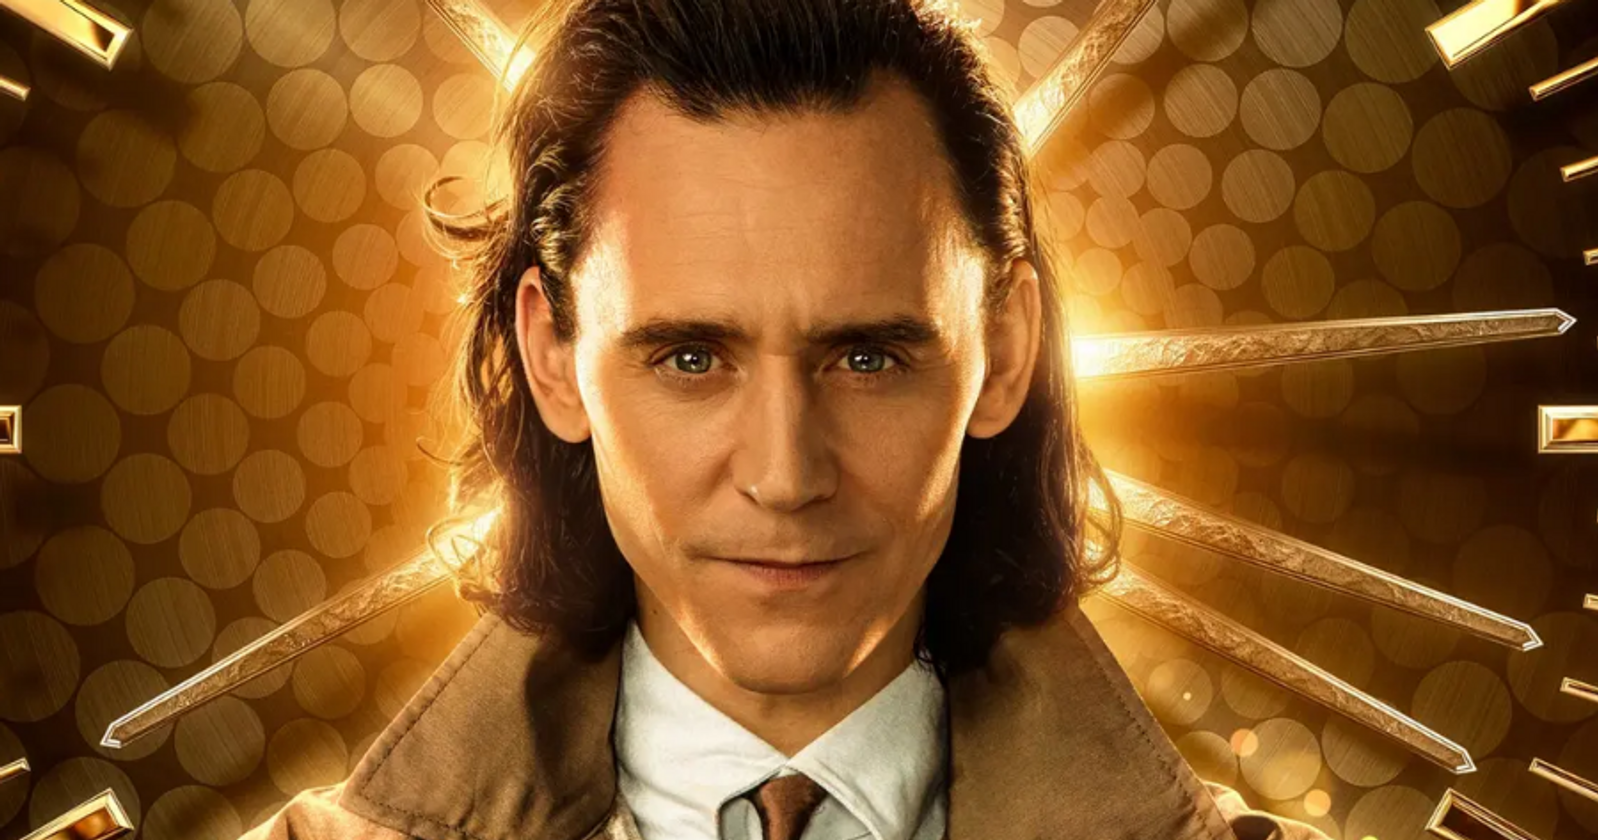 Who is Marvel's Hyperion? Henry Cavill x Loki Season 2 rumors explored